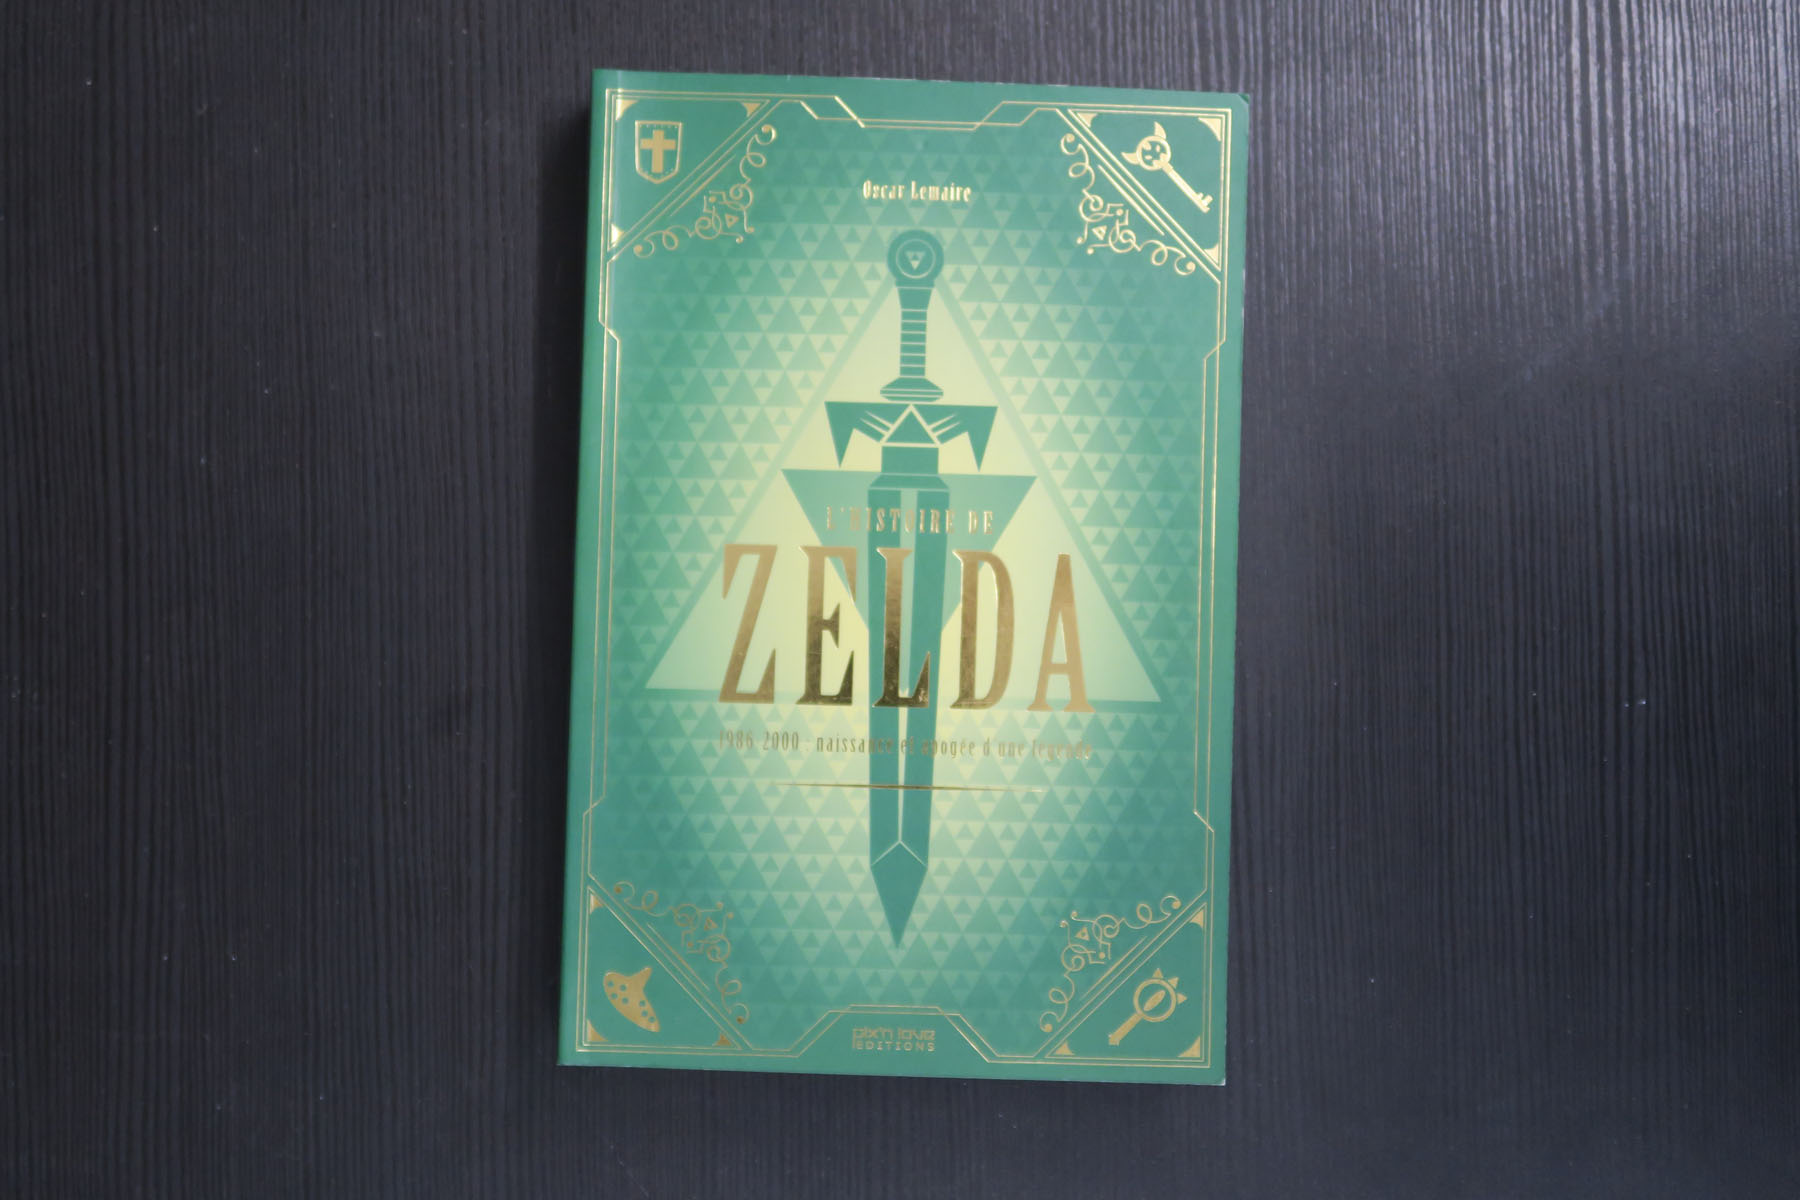 L'Histoire de Zelda Vol. 1 - Les Origines d'une Saga Légendaire